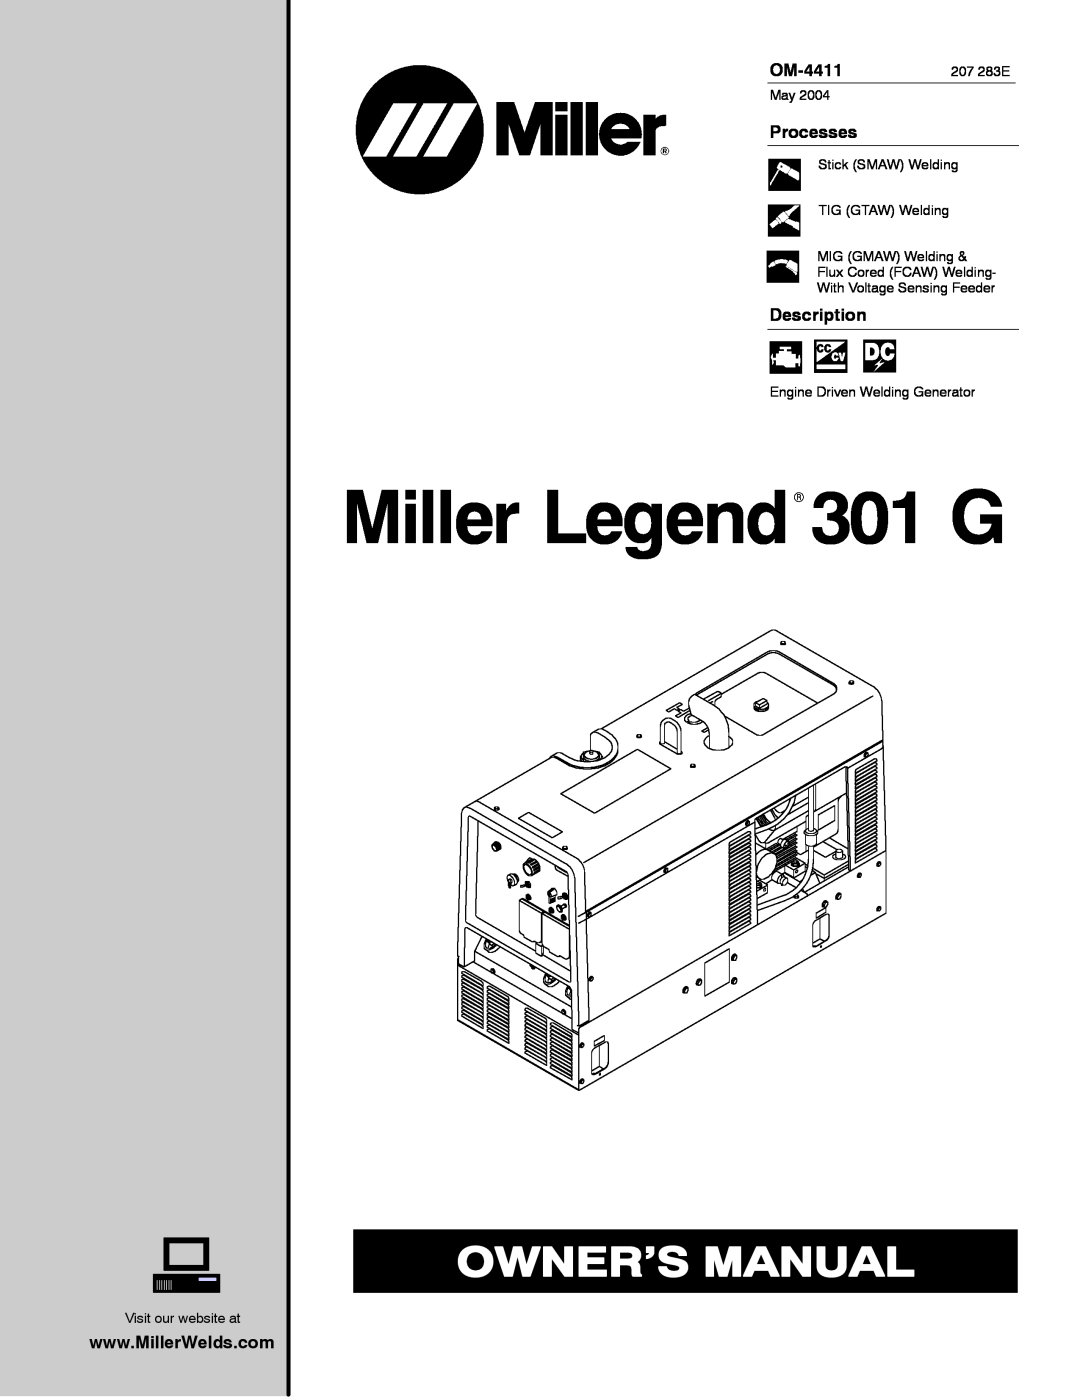 Miller Electric manual Miller LegendR 301 G, OM-4411207 283E, Processes, Description 